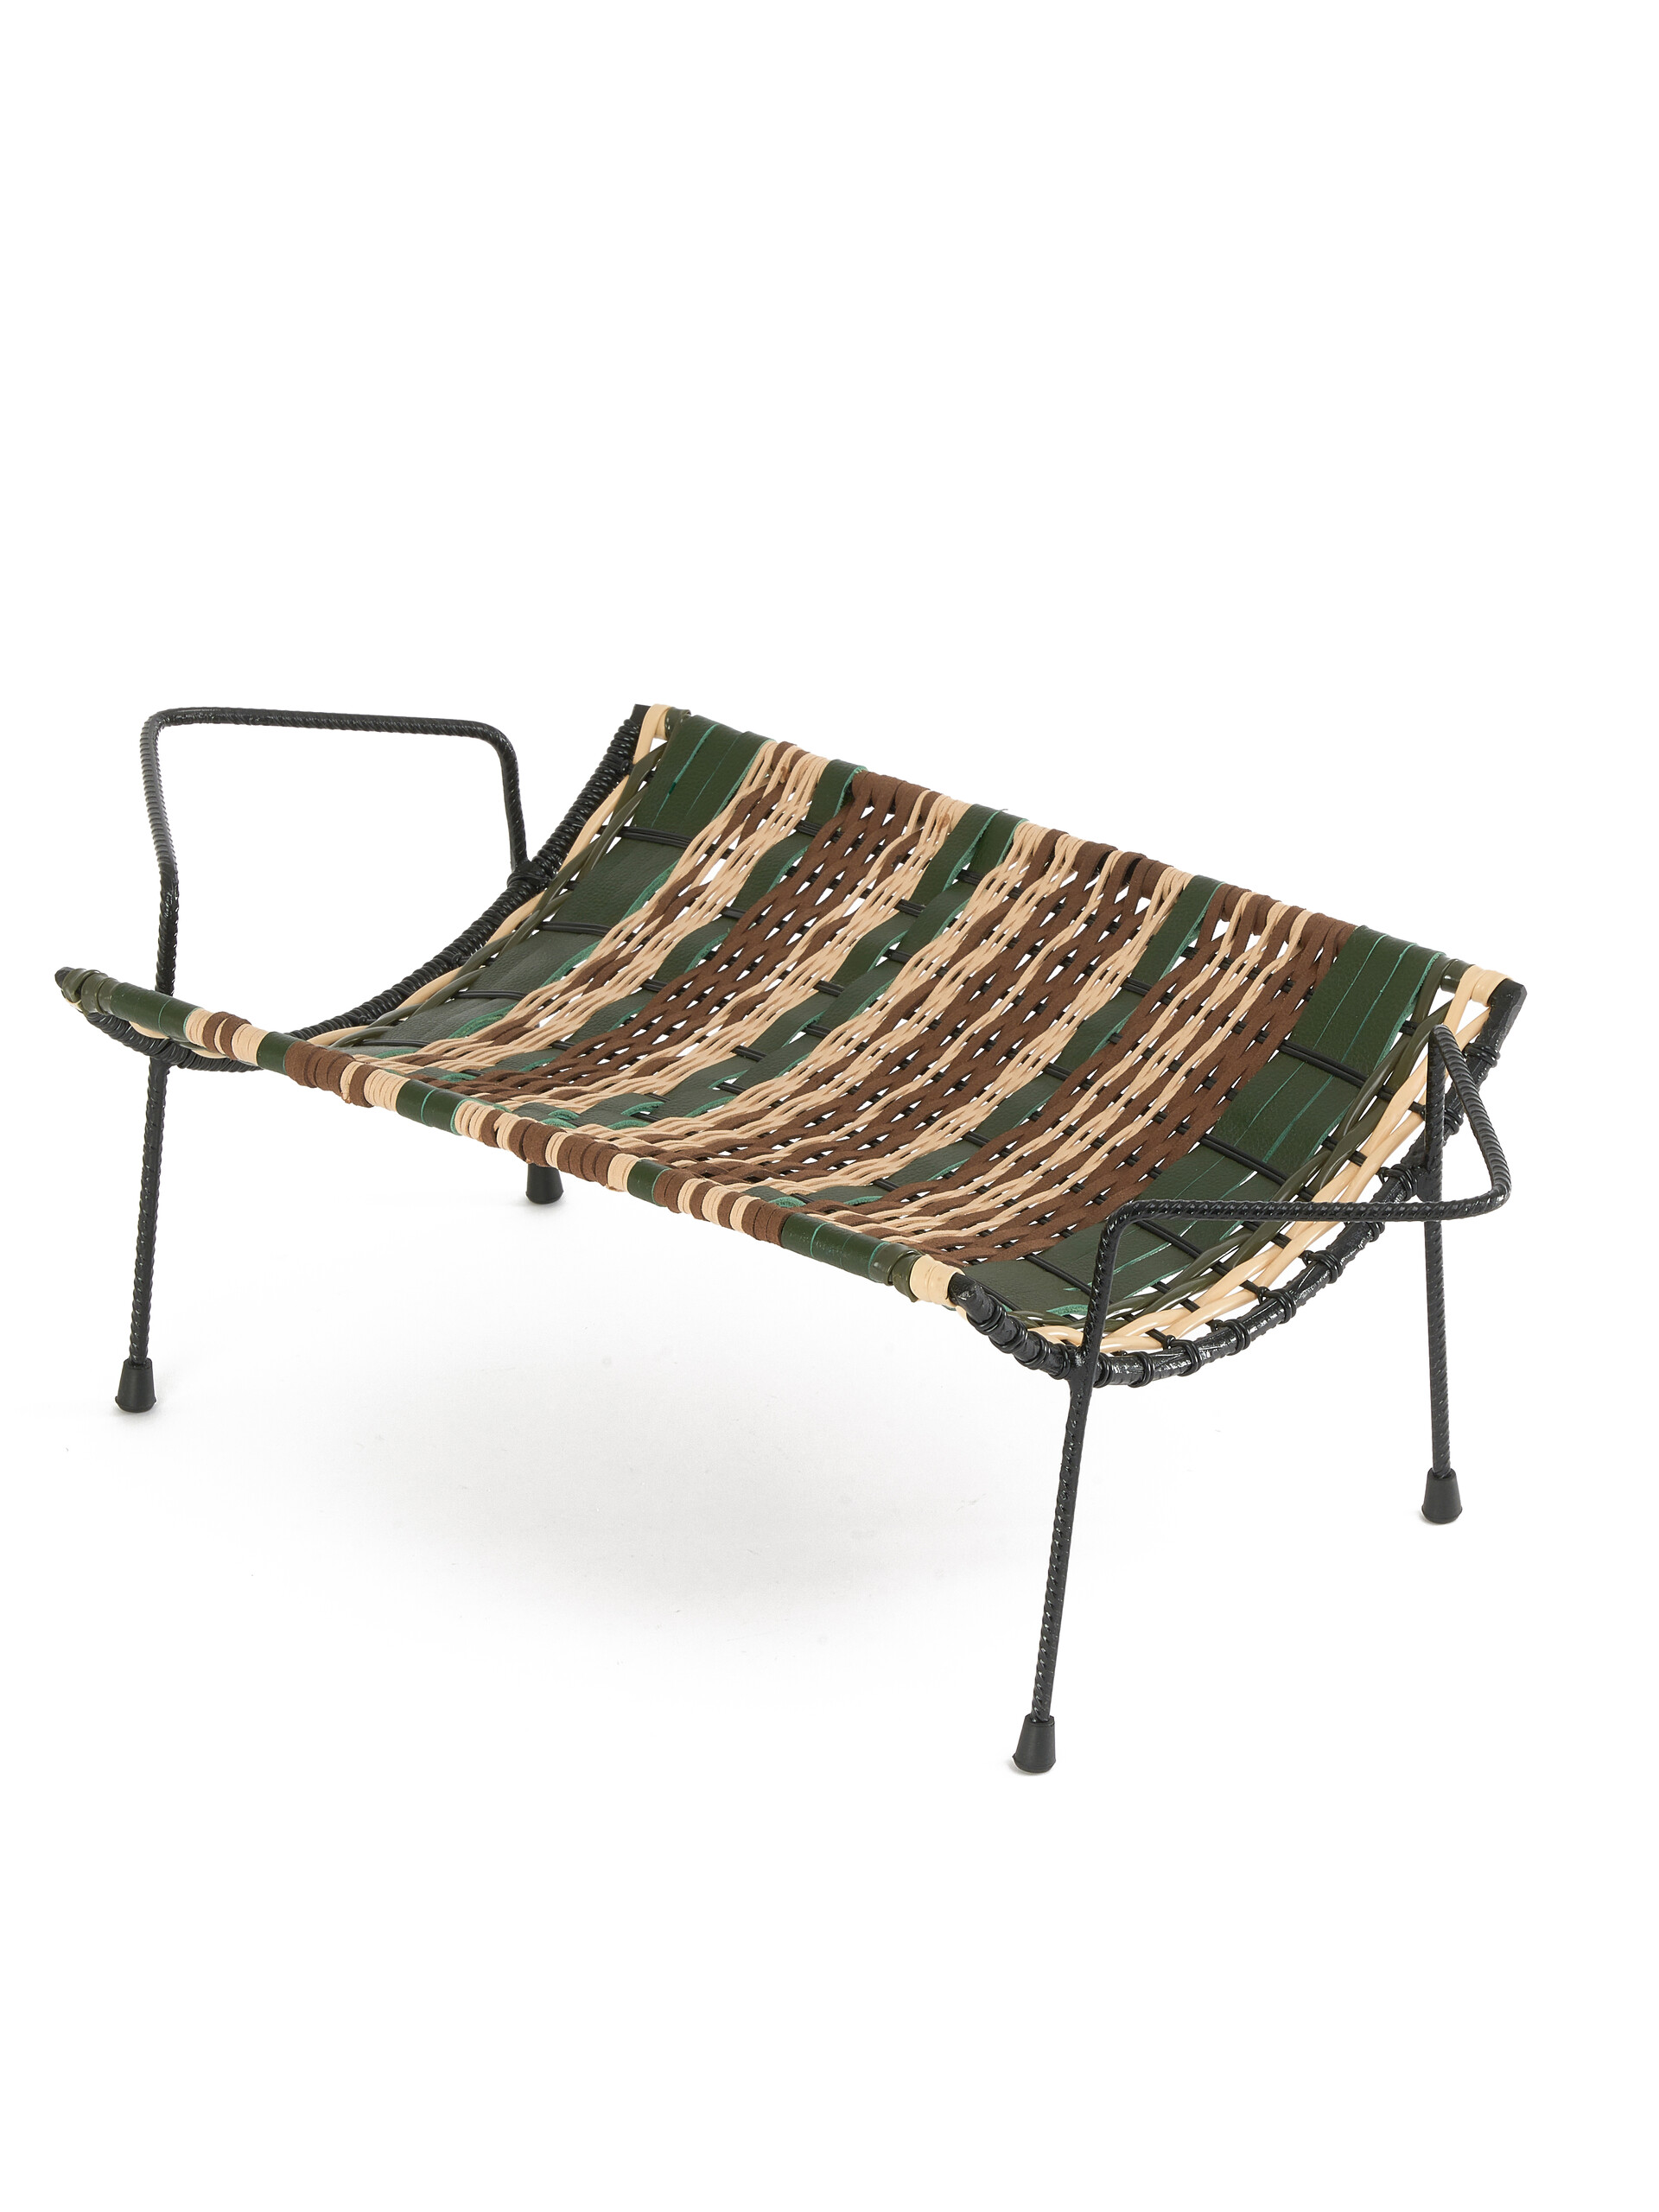 Deep green Marni Market woven filing tray - Furniture - Image 3